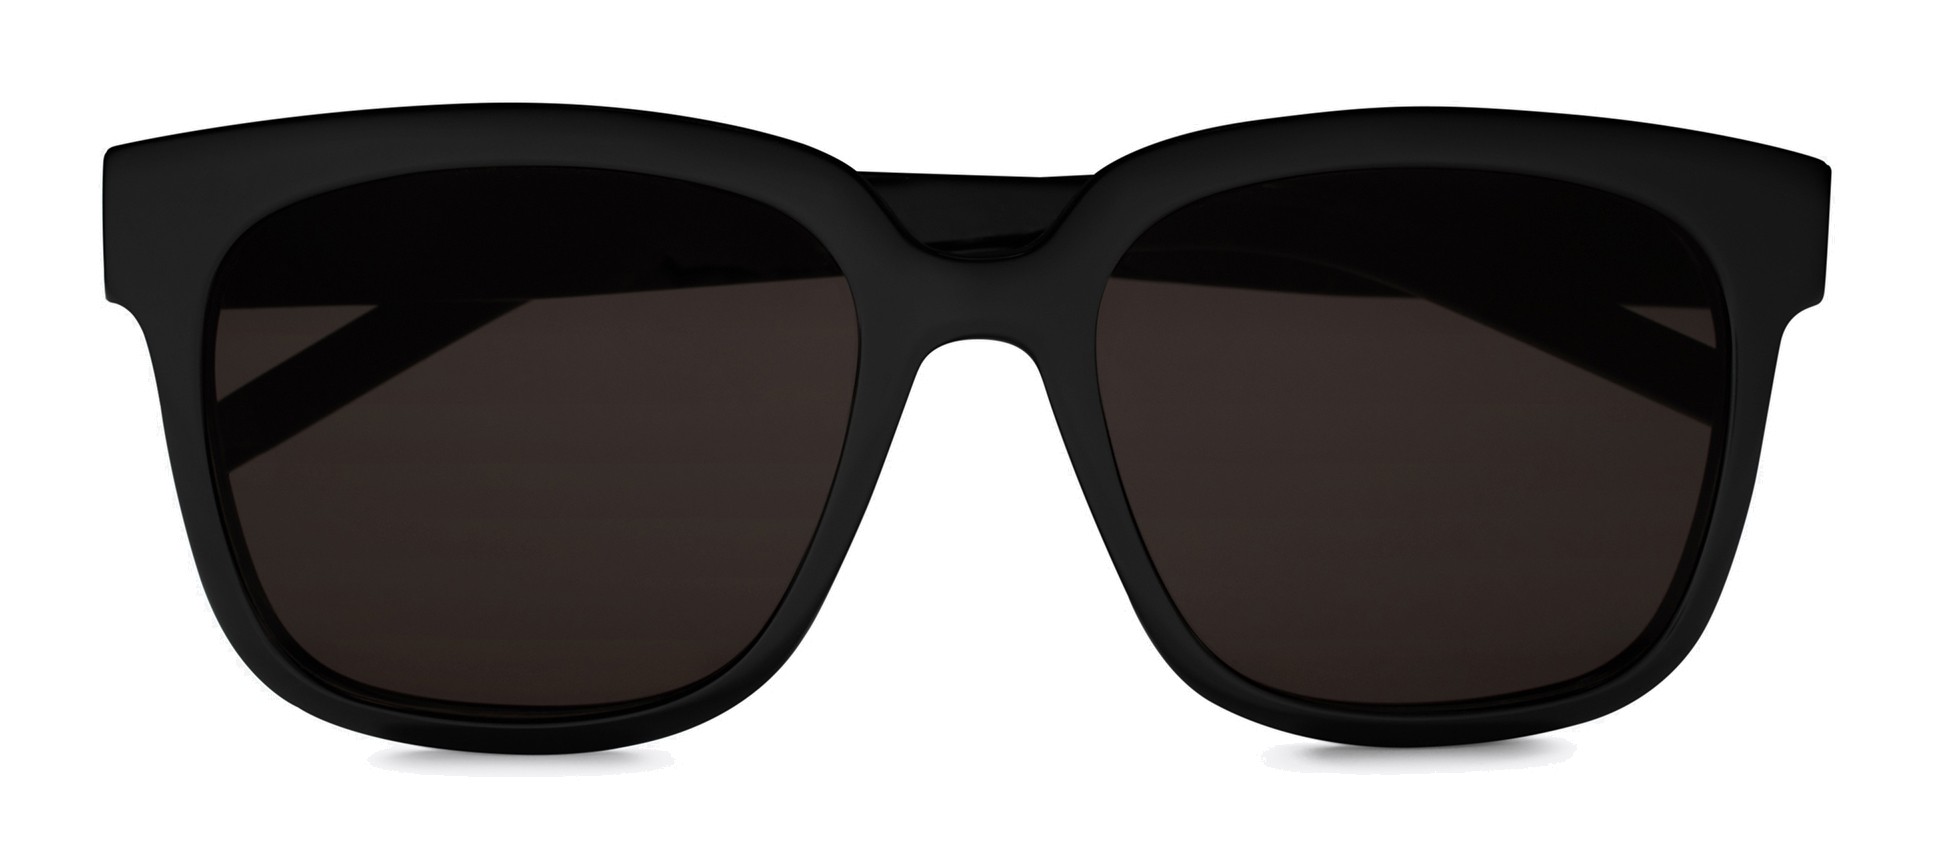 Yves Saint Laurent - SL 74 Sunglasses - Black - Sunglasses - Saint Laurent  Eyewear - Avvenice